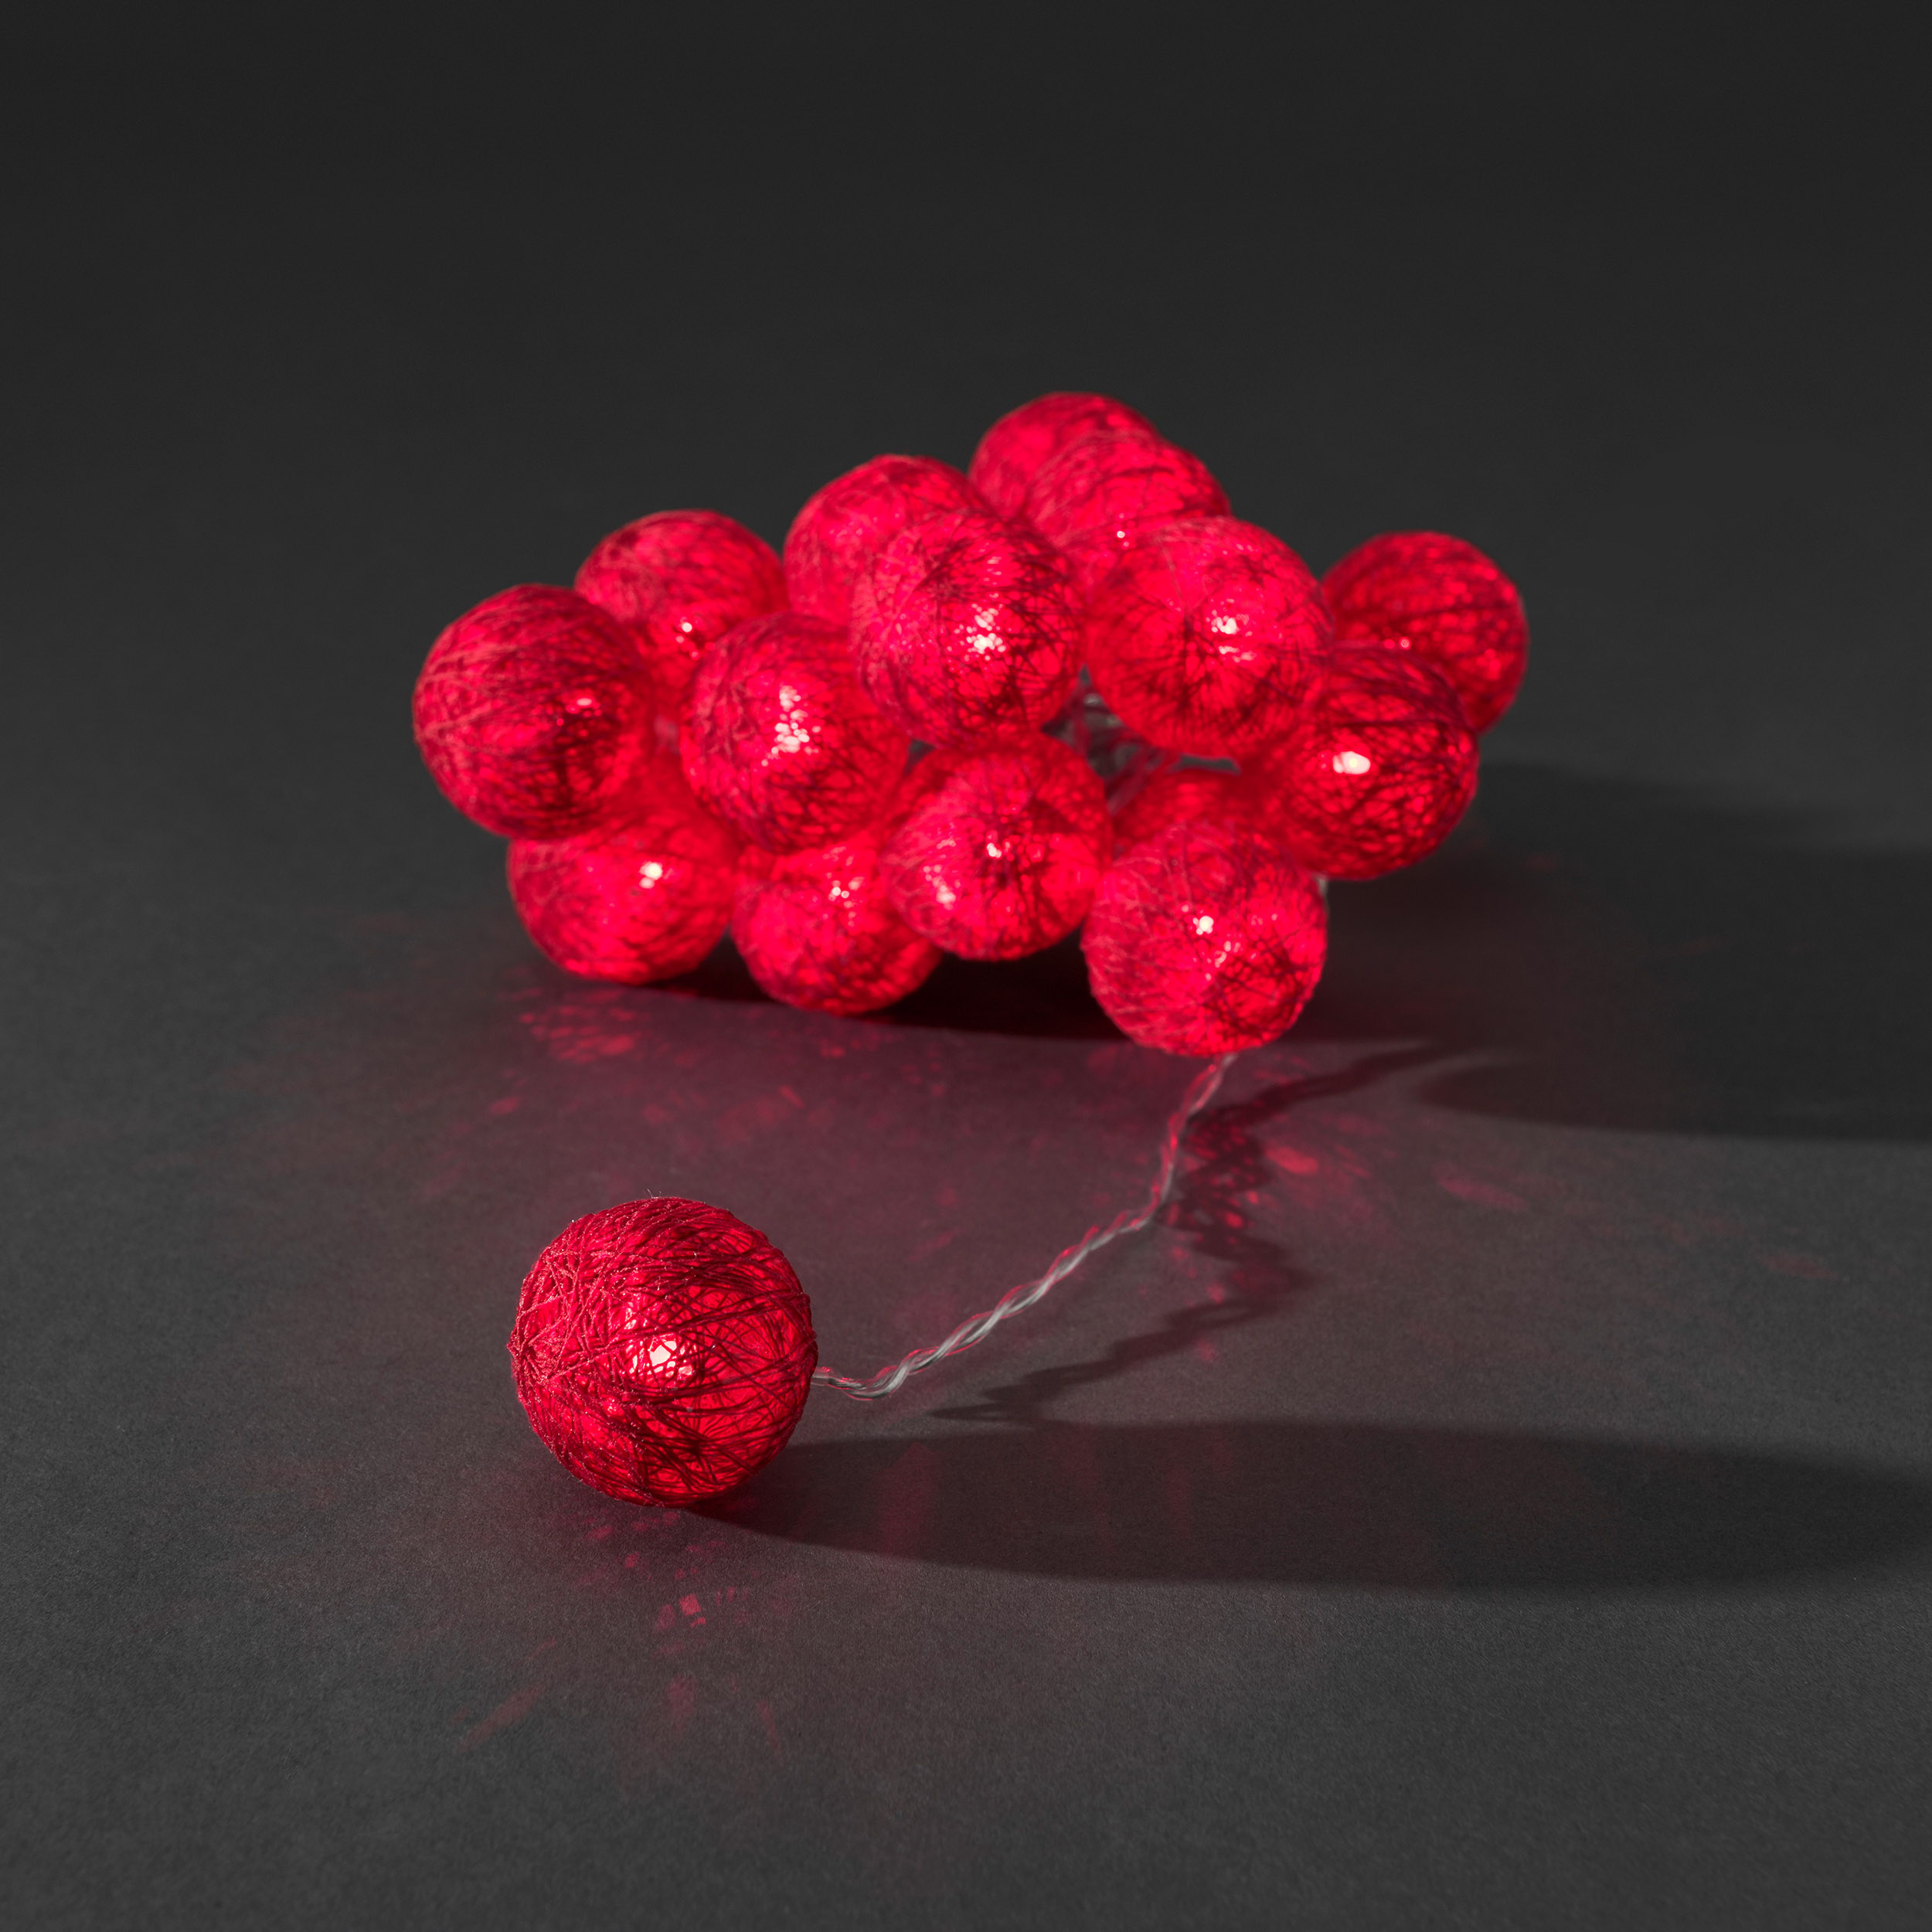 Decorative LED light set with red cotton balls, 3.5cm